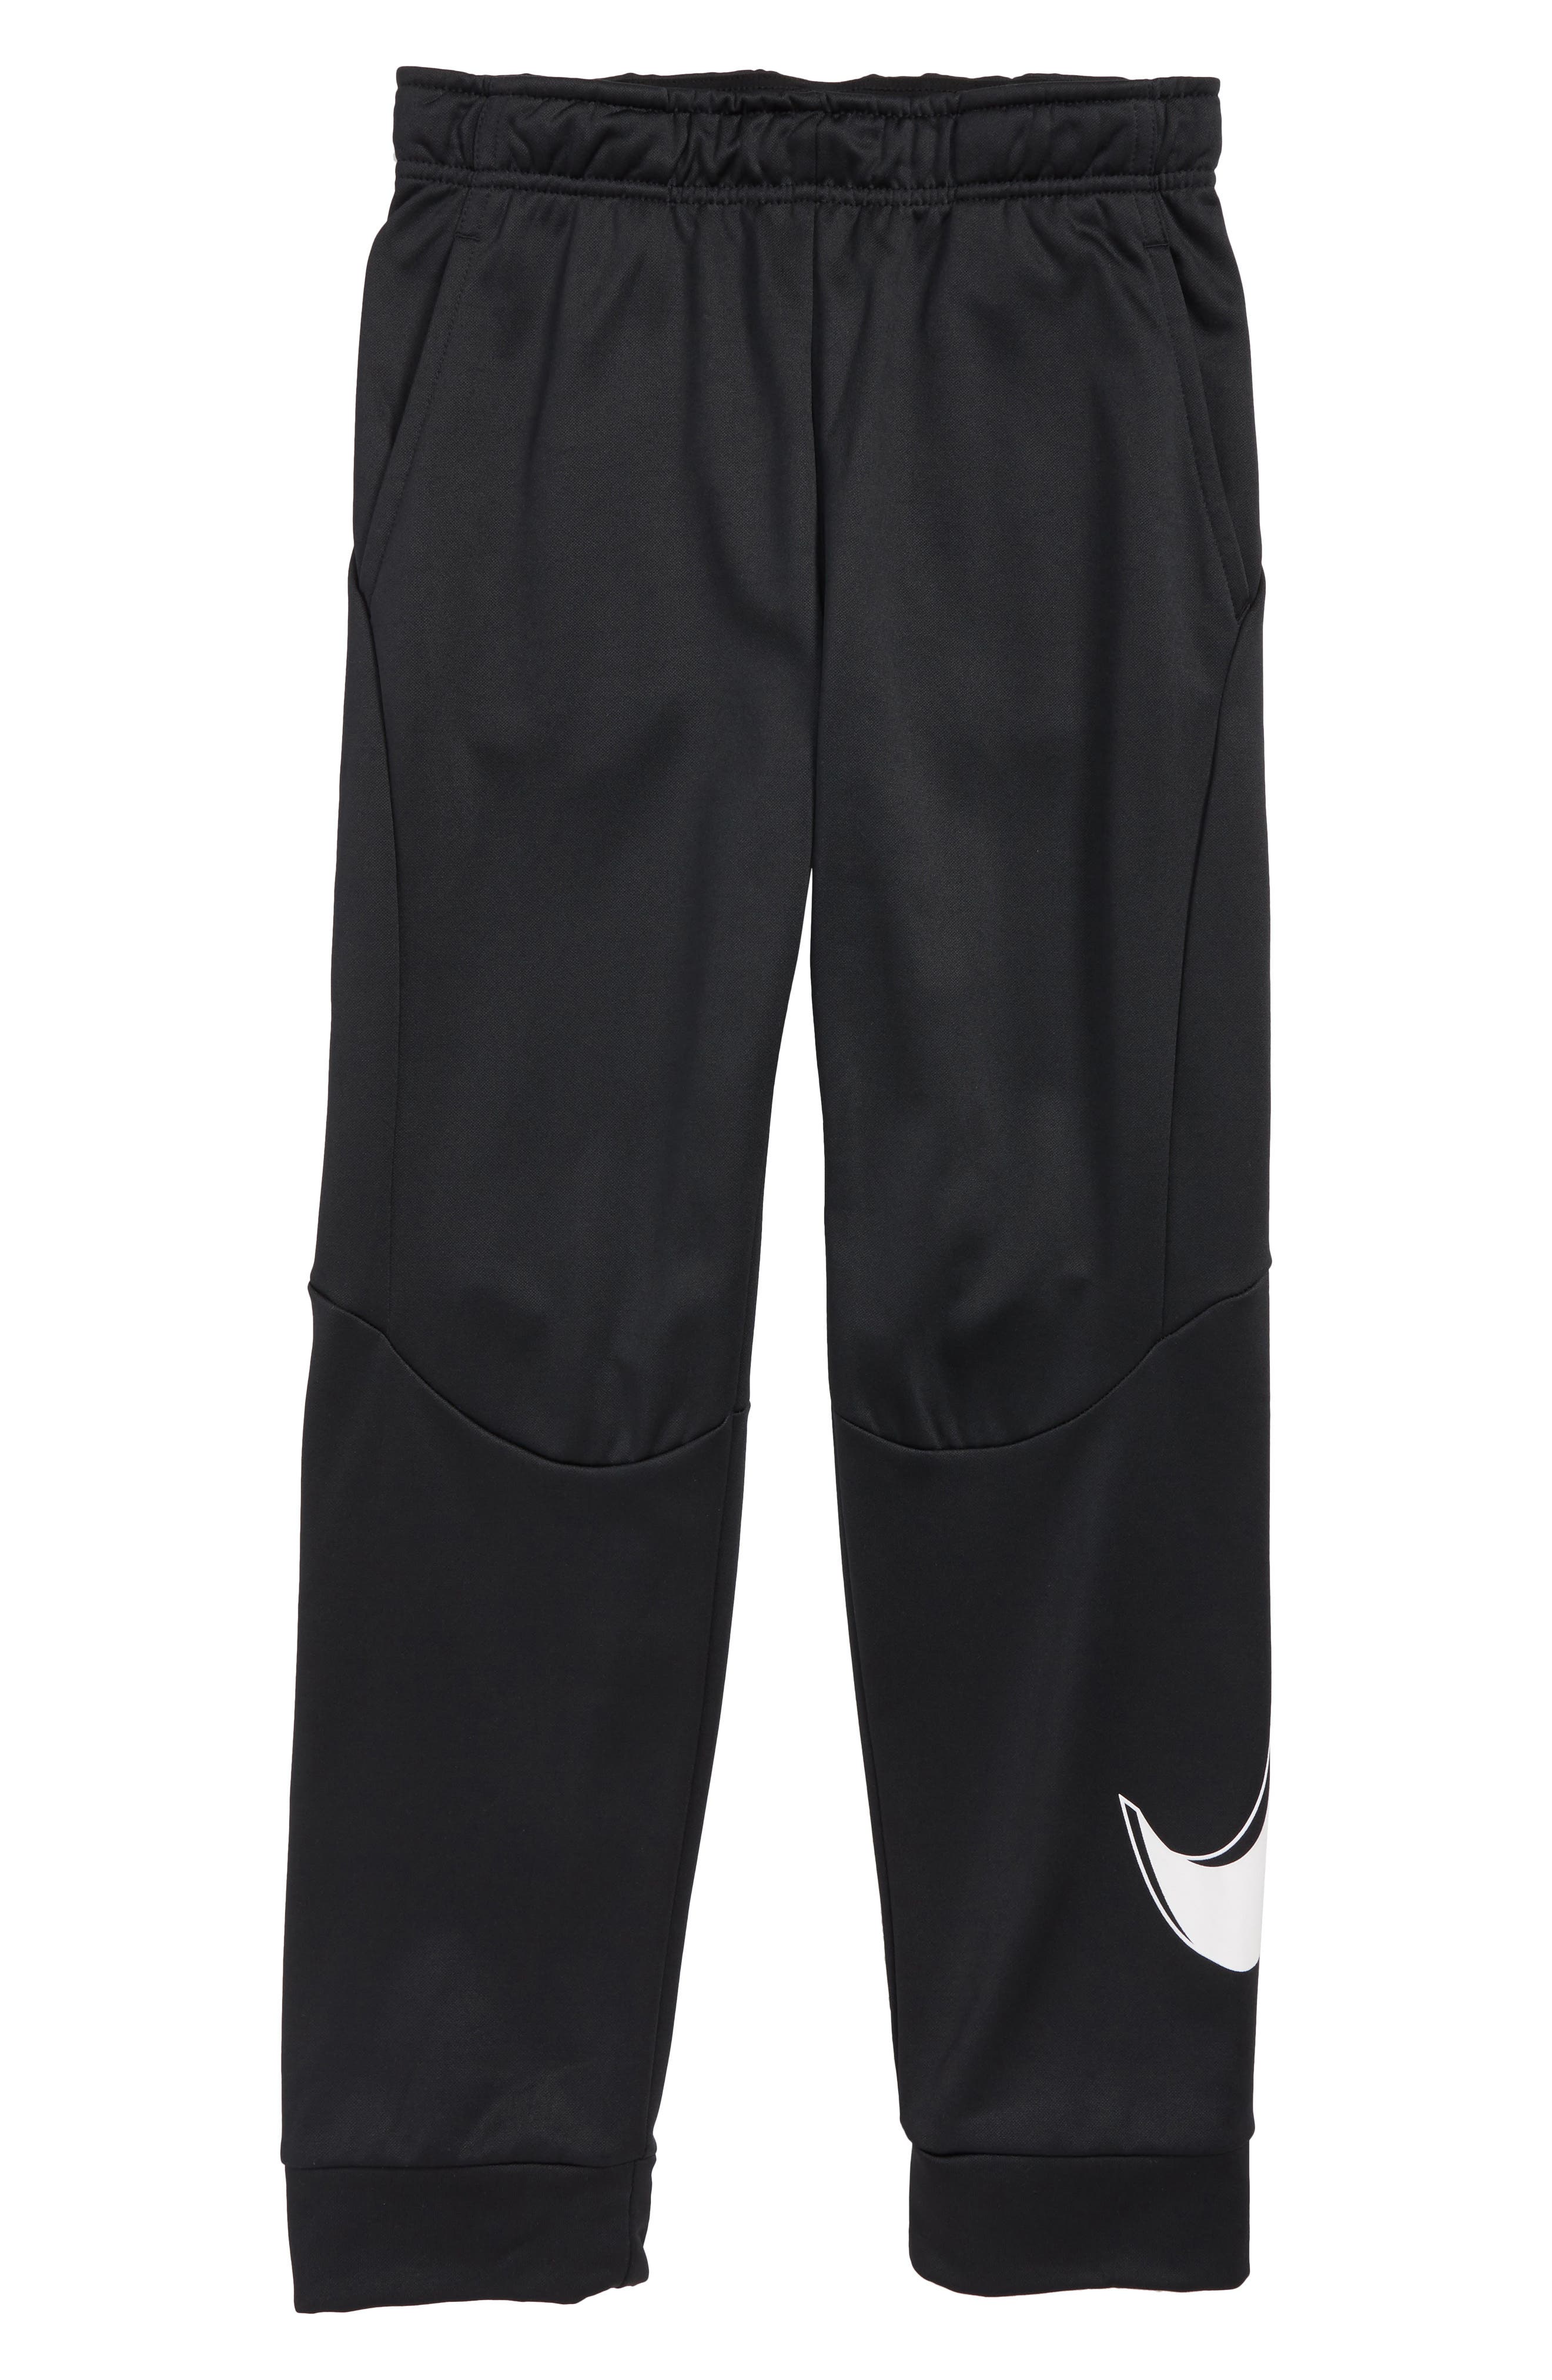 UPC 885178924217 product image for Boy's Nike Therma Sweatpants, Size XL (18-20) - Black | upcitemdb.com